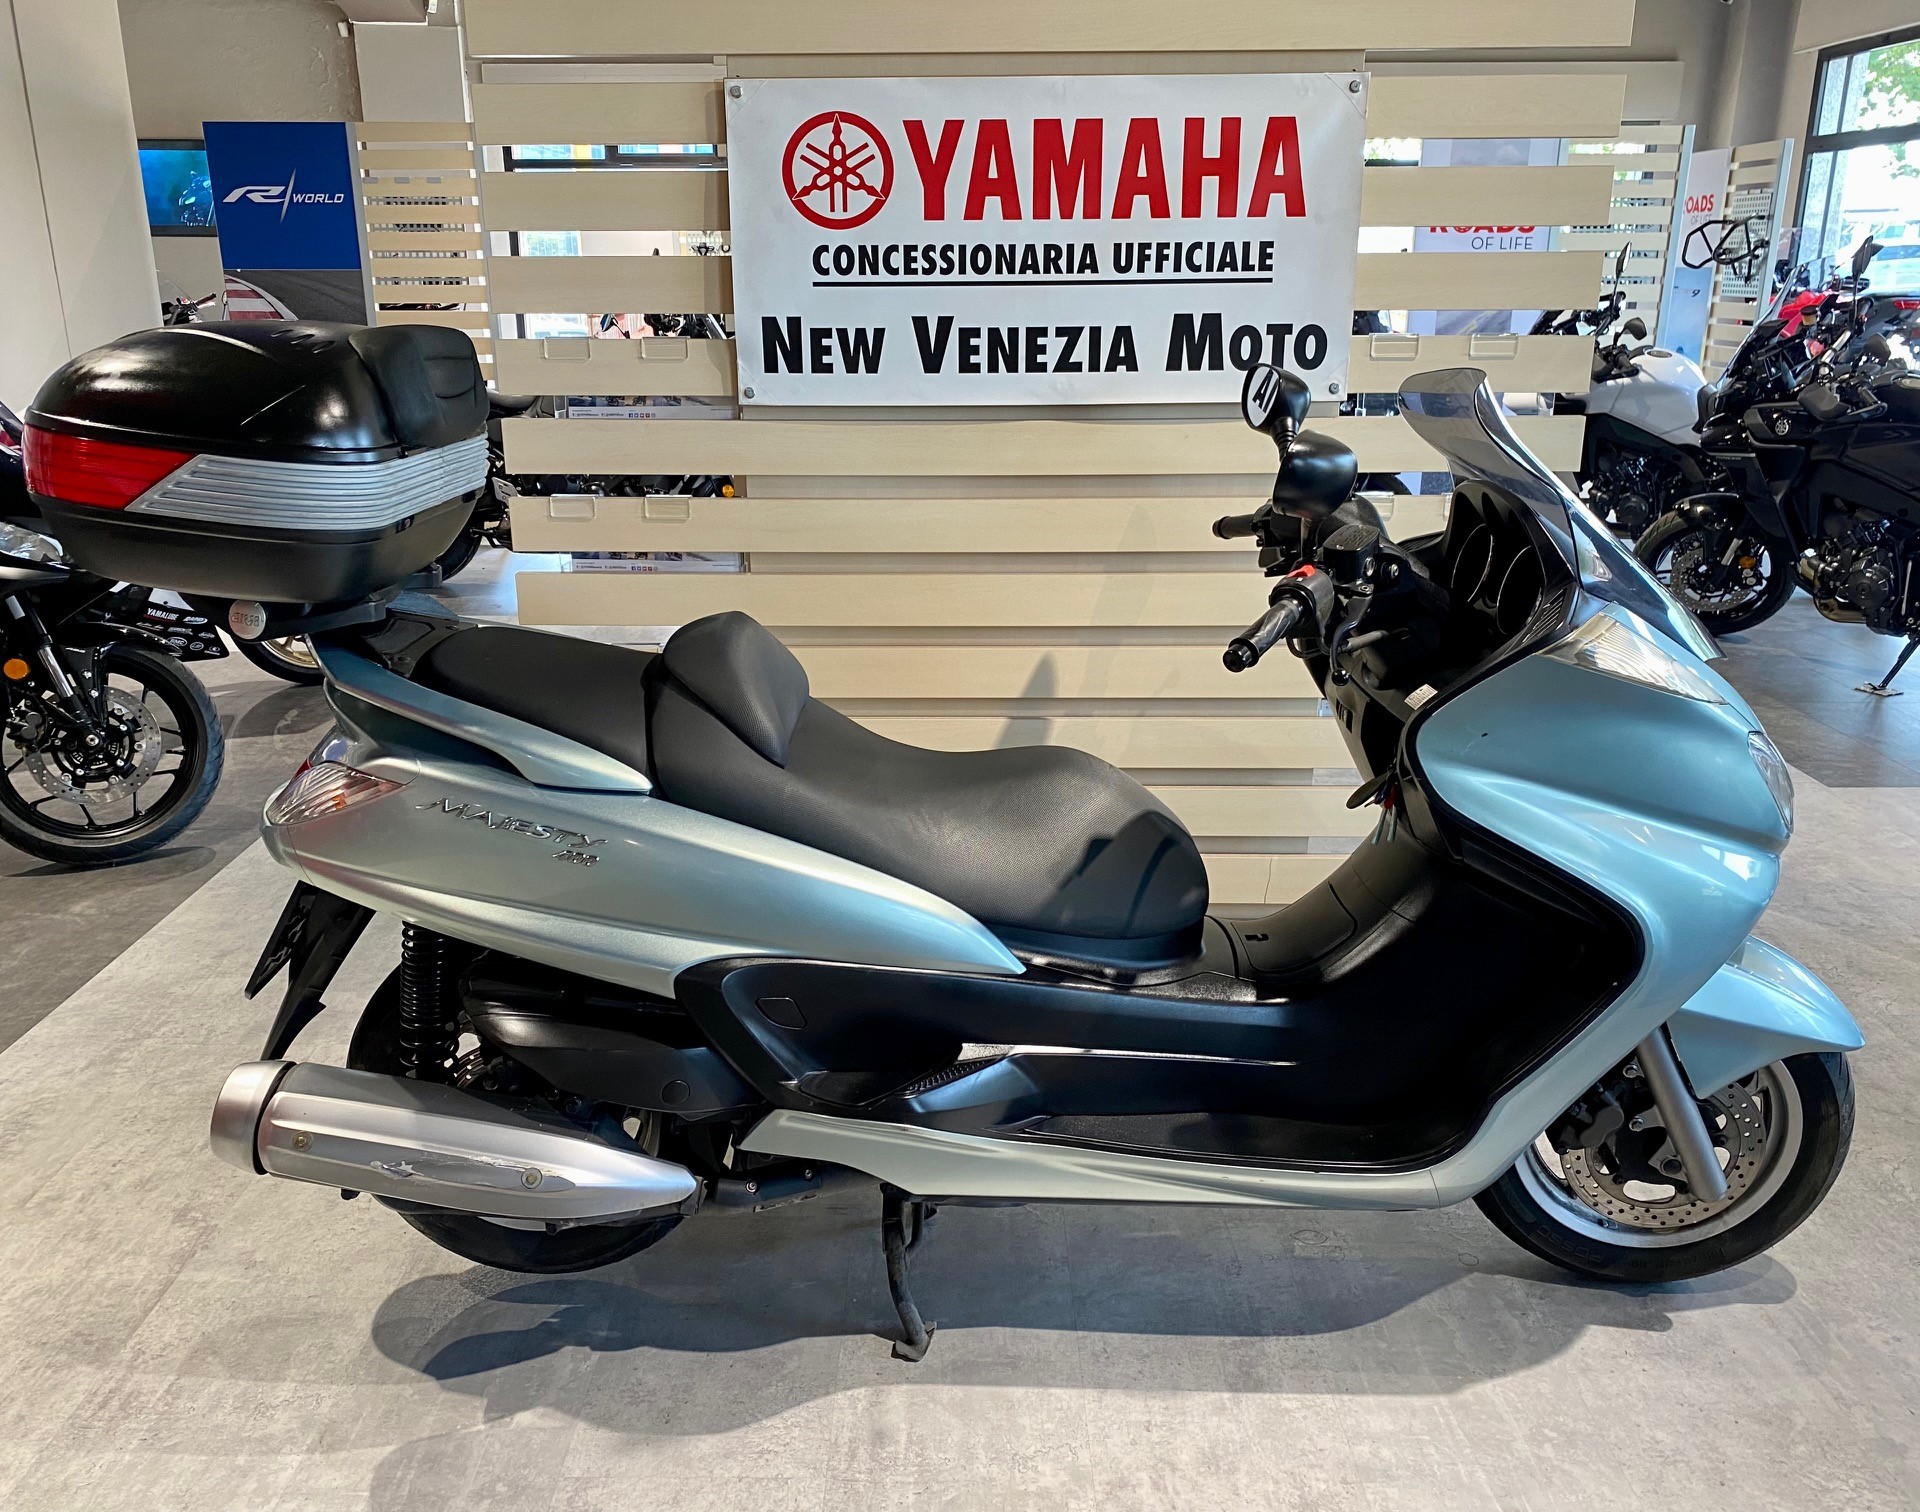 Yamaha Majesty 400 usata disponibile a VE